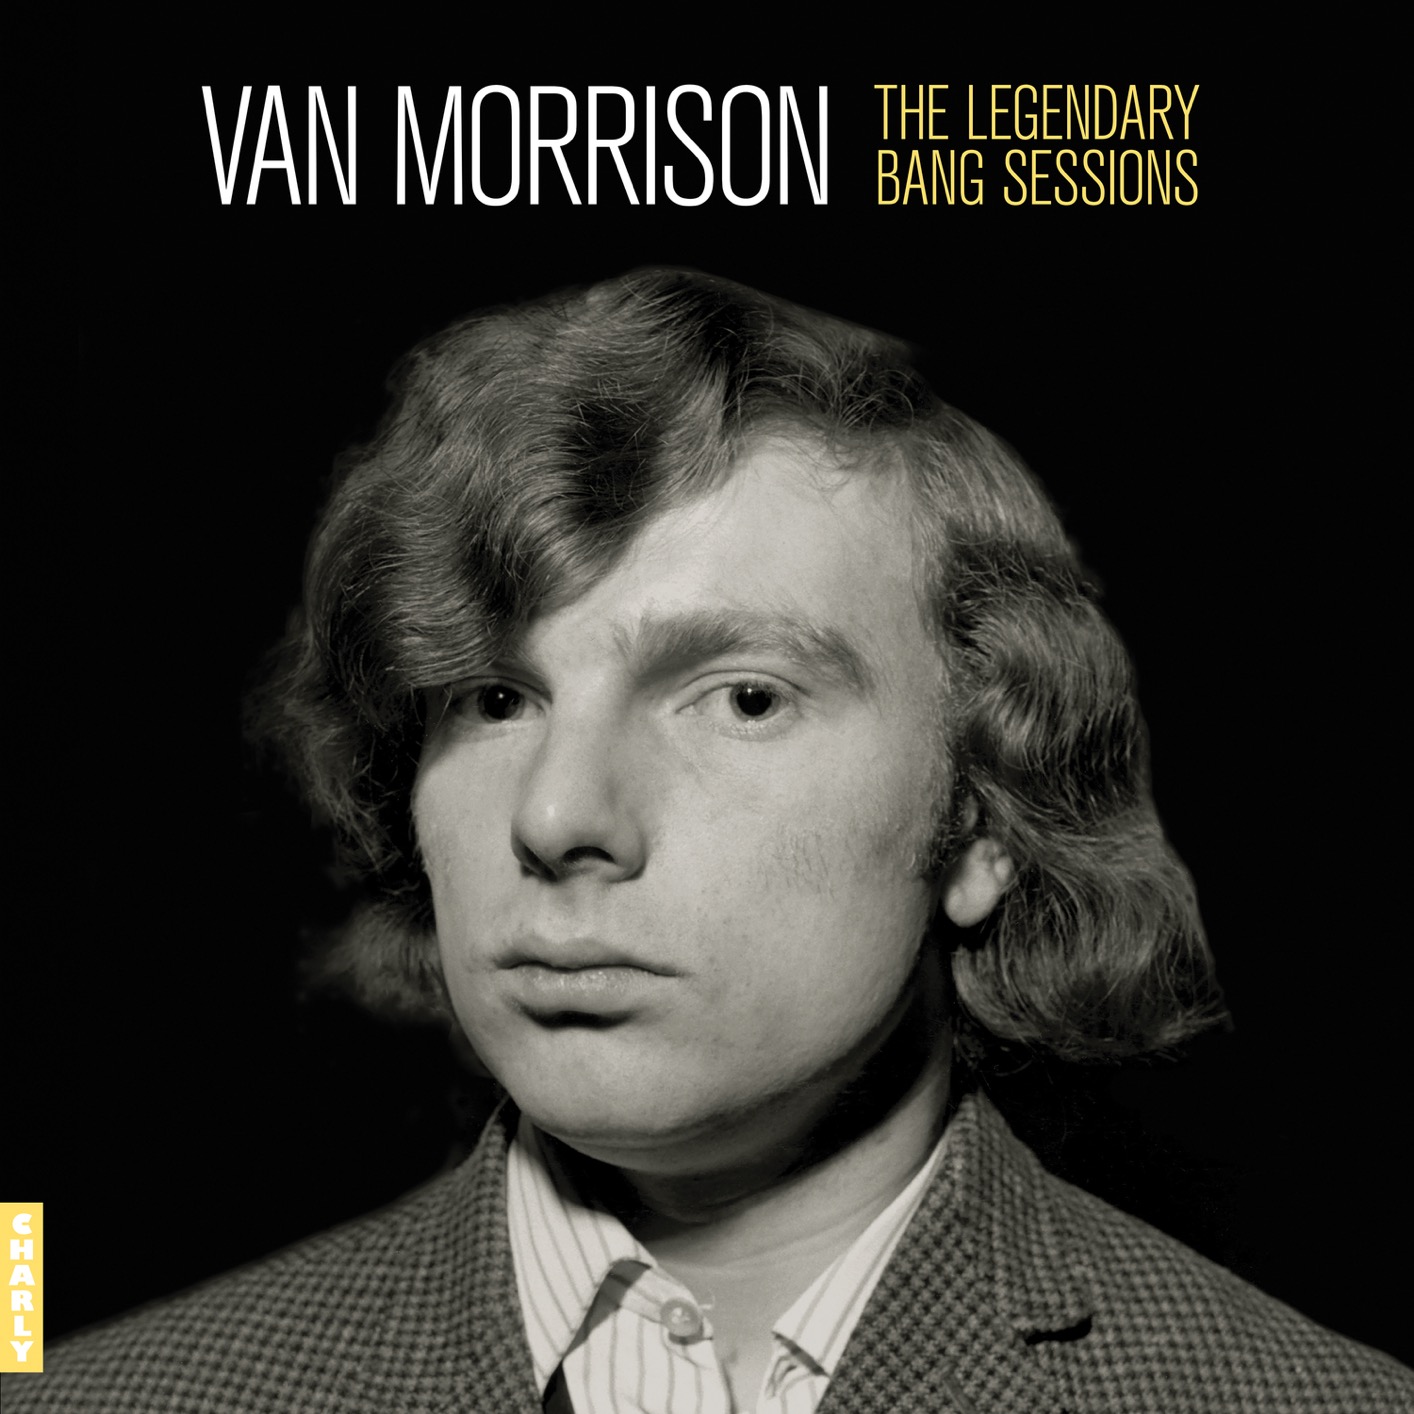 The Legendary Bang Sessions (Remastered). Album of Van Morrison buy or  stream.